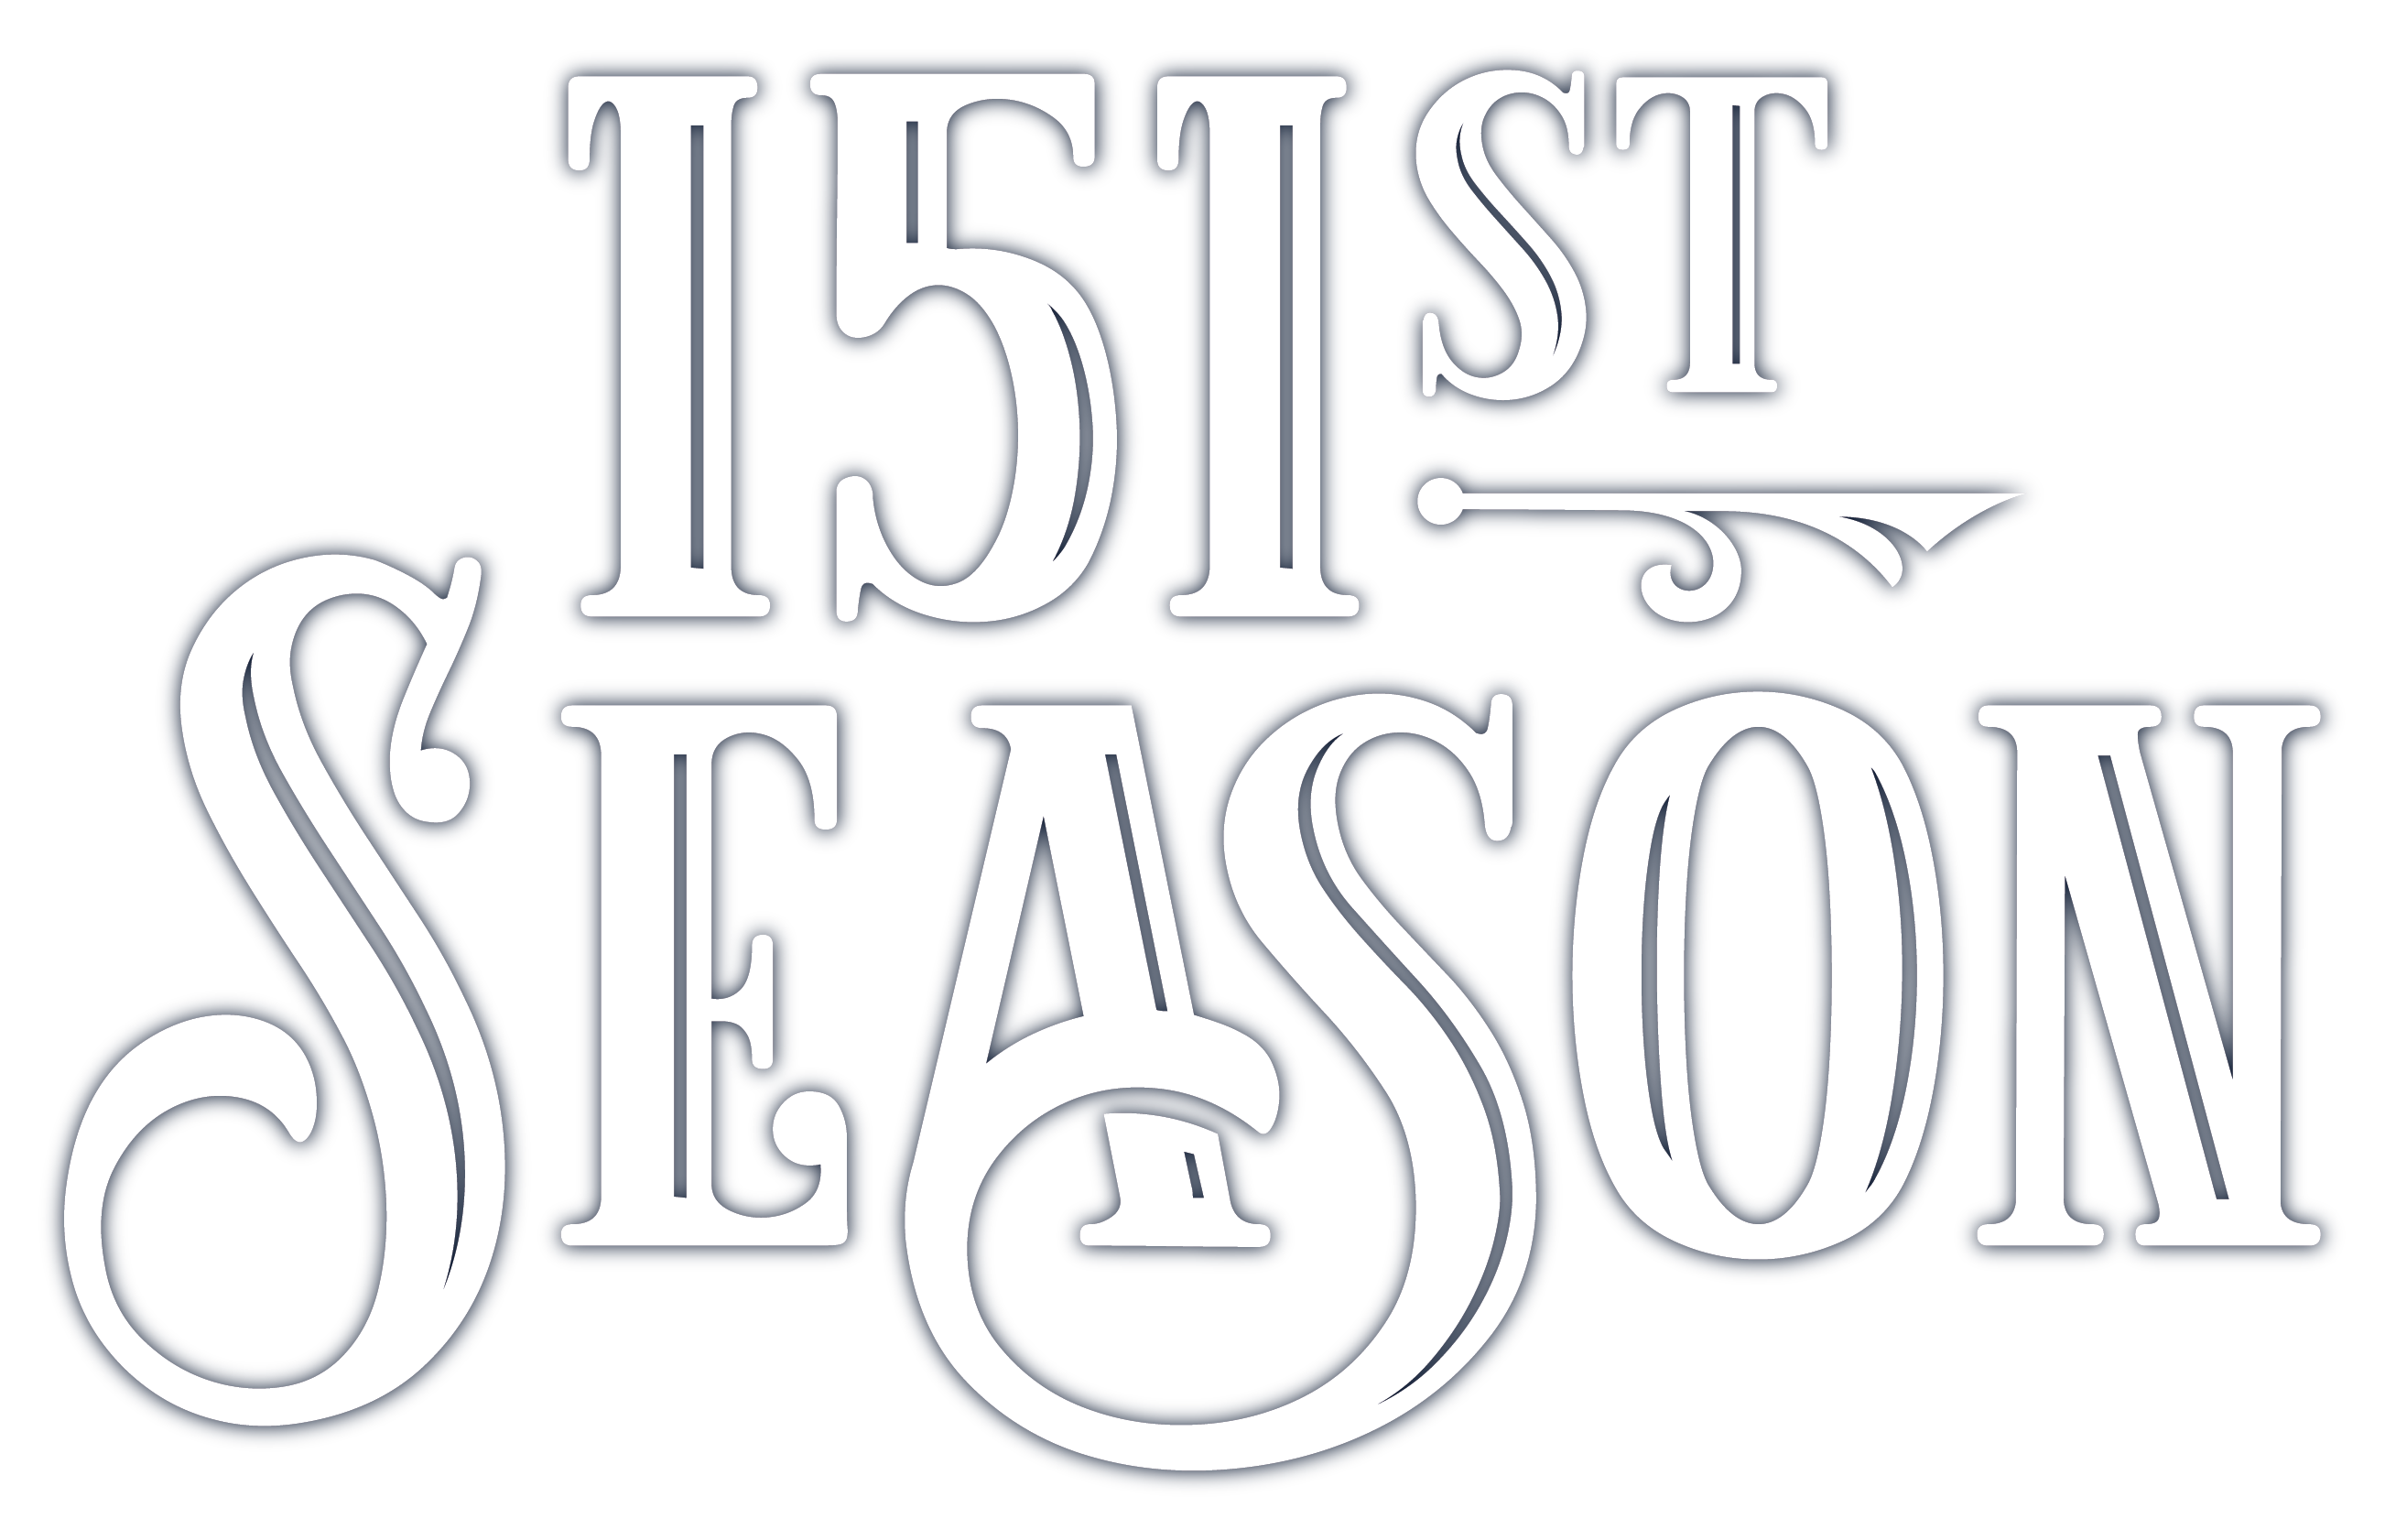 151st Season Logo